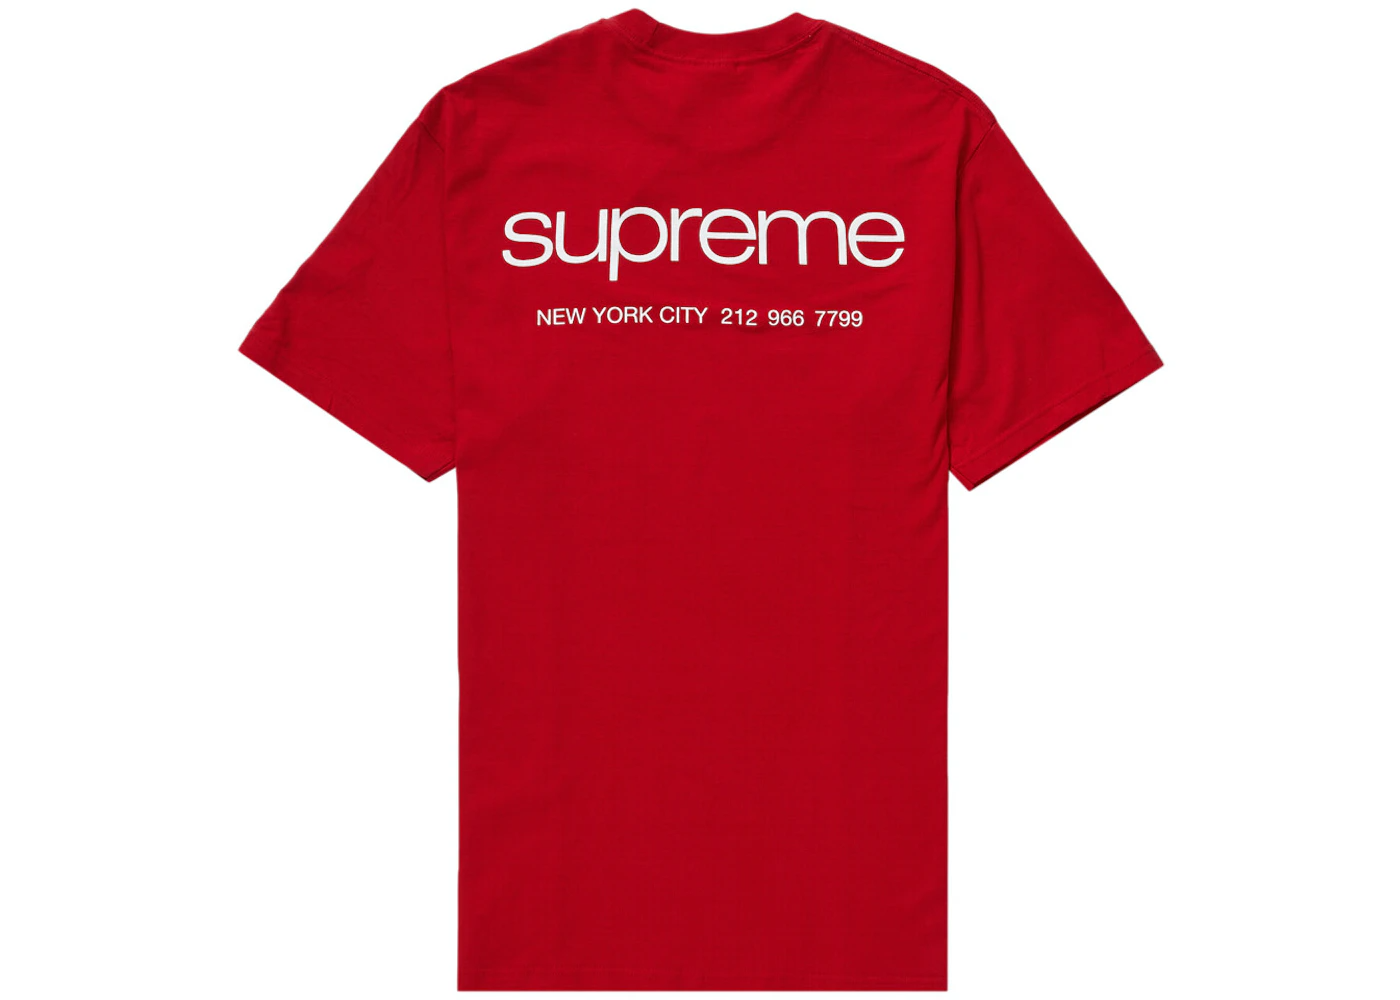 Supreme NYC Tee Red